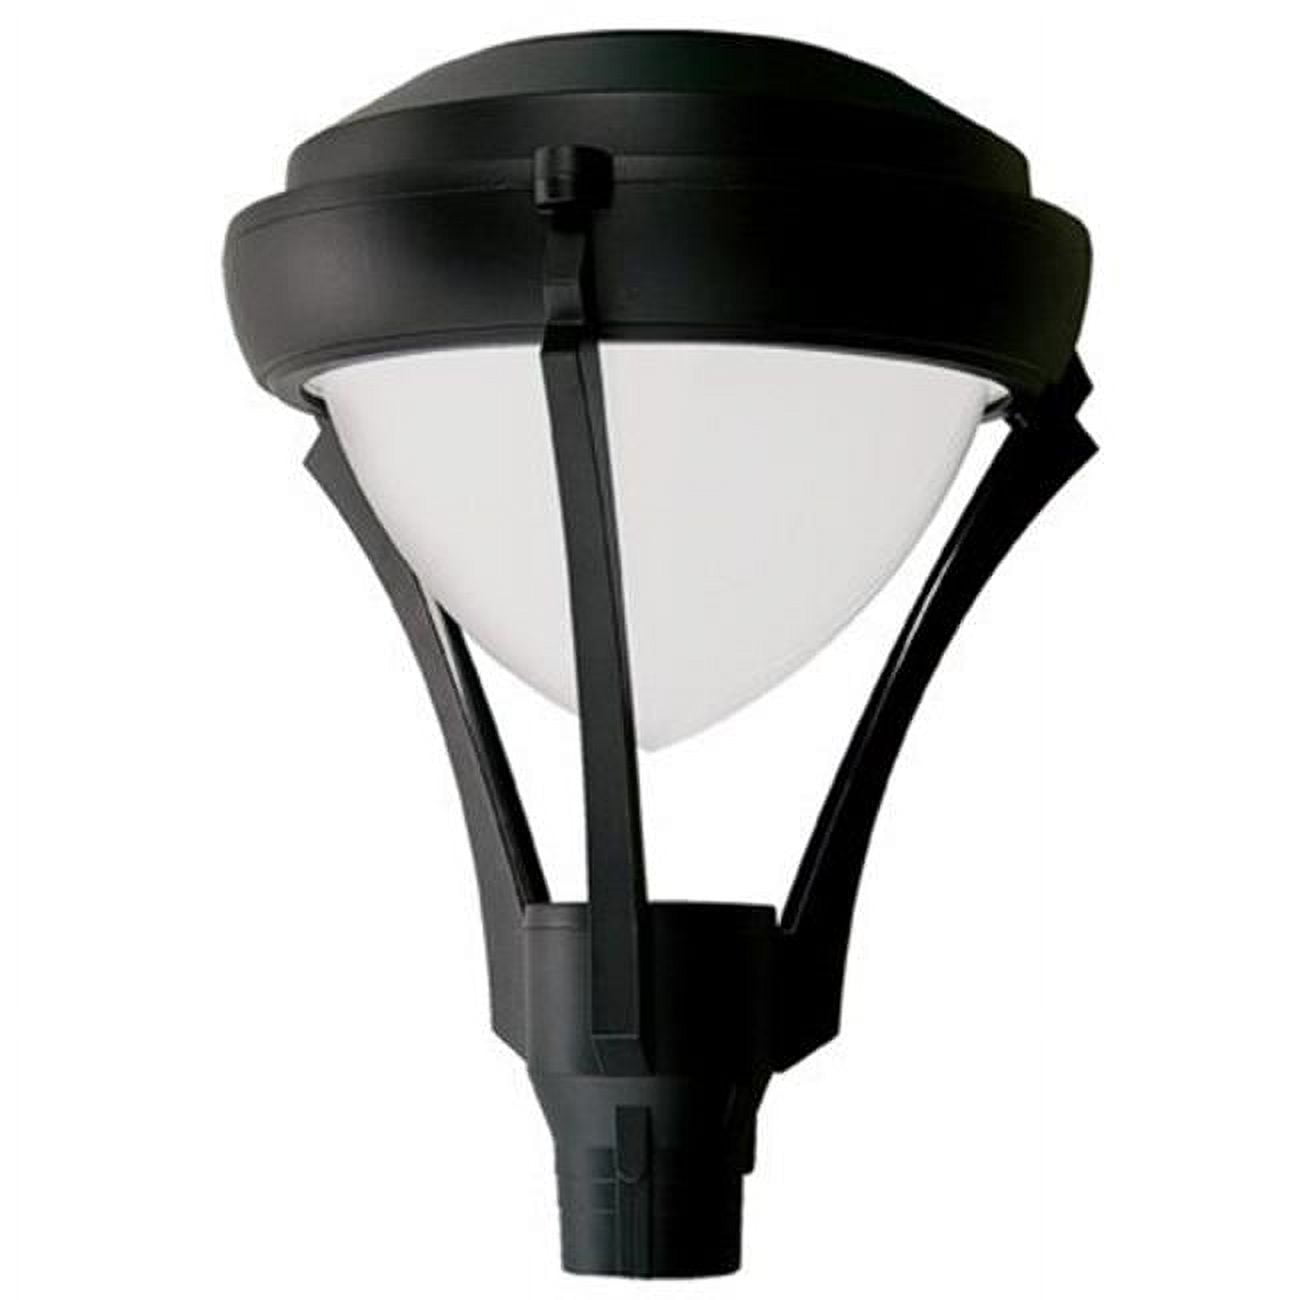 Gm597-b-mt 70w Powder Coated Cast Aluminum Post Top Light Fixture With Metal Halide Lamp, Black - 27.95 X 21.65 X 21.65 In.